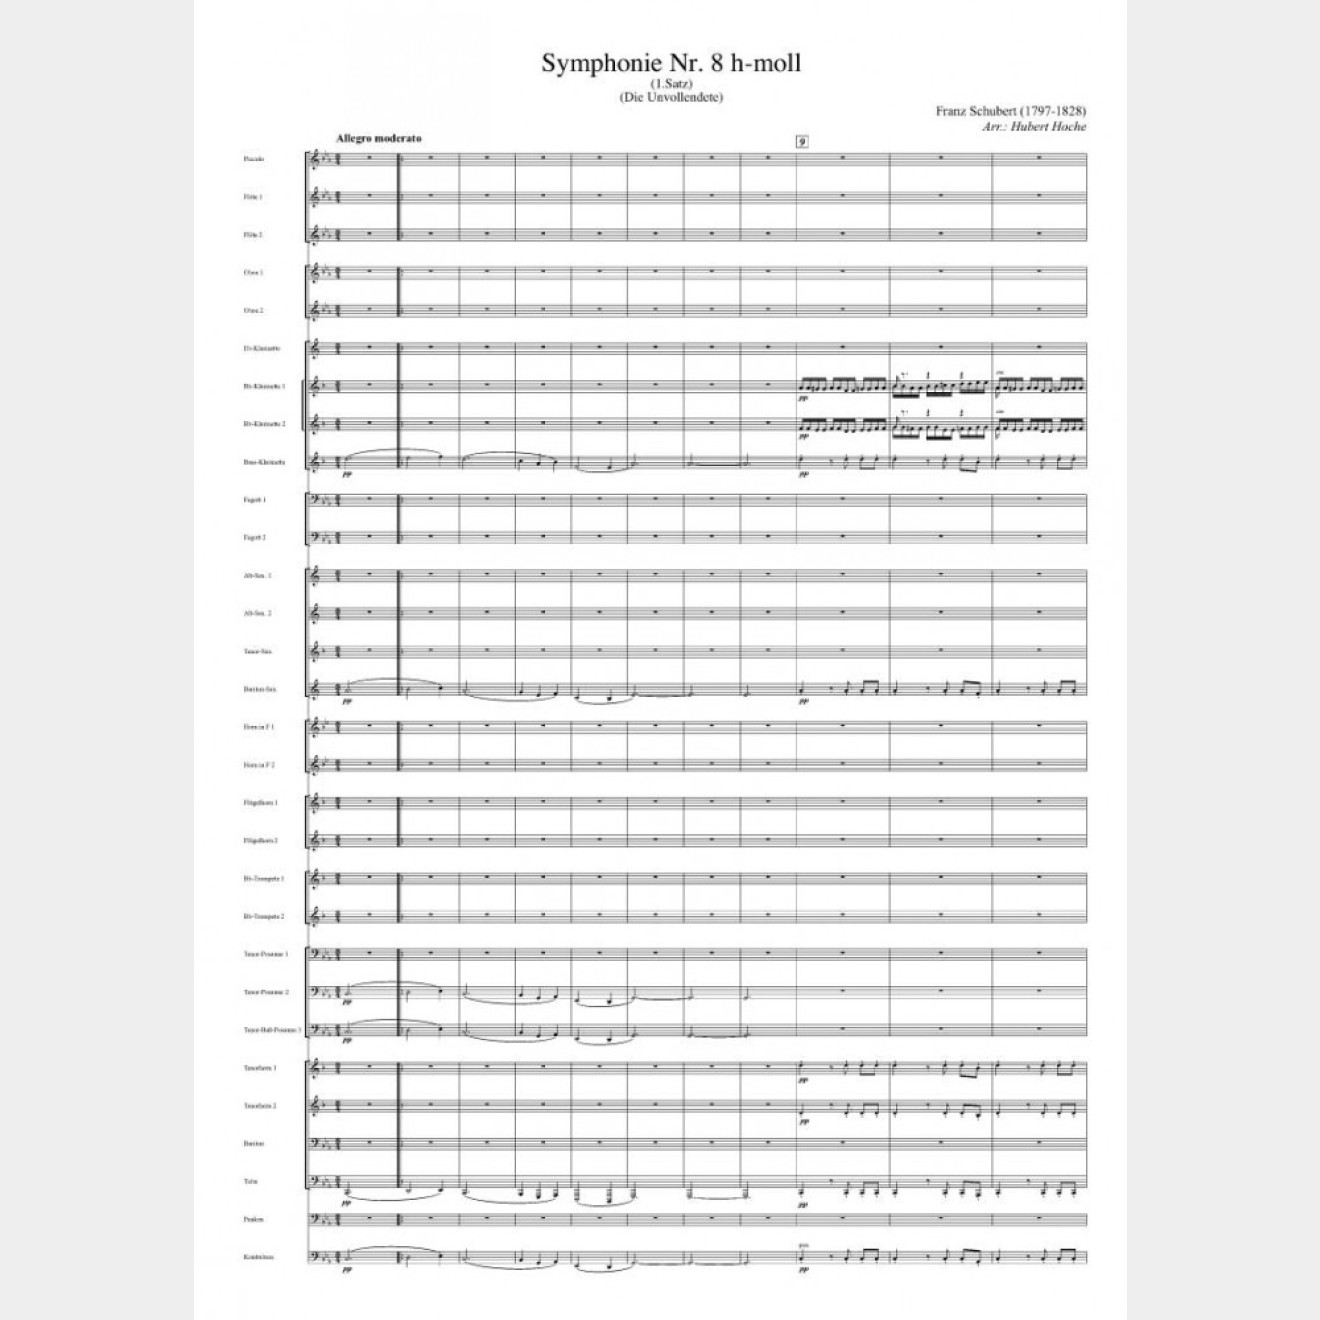 Sinfonie Nr 8 (1. movement) B minor, 15`